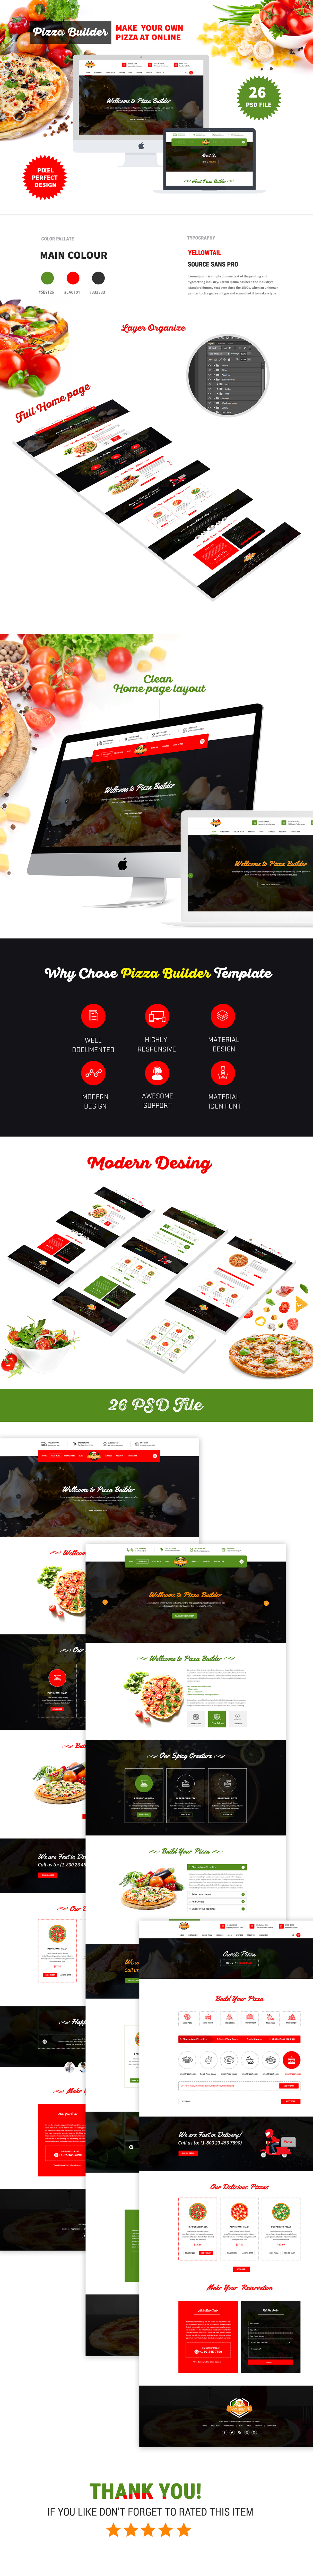 Pizza Builder- Online Pizza Making Restaurant PSD - 1